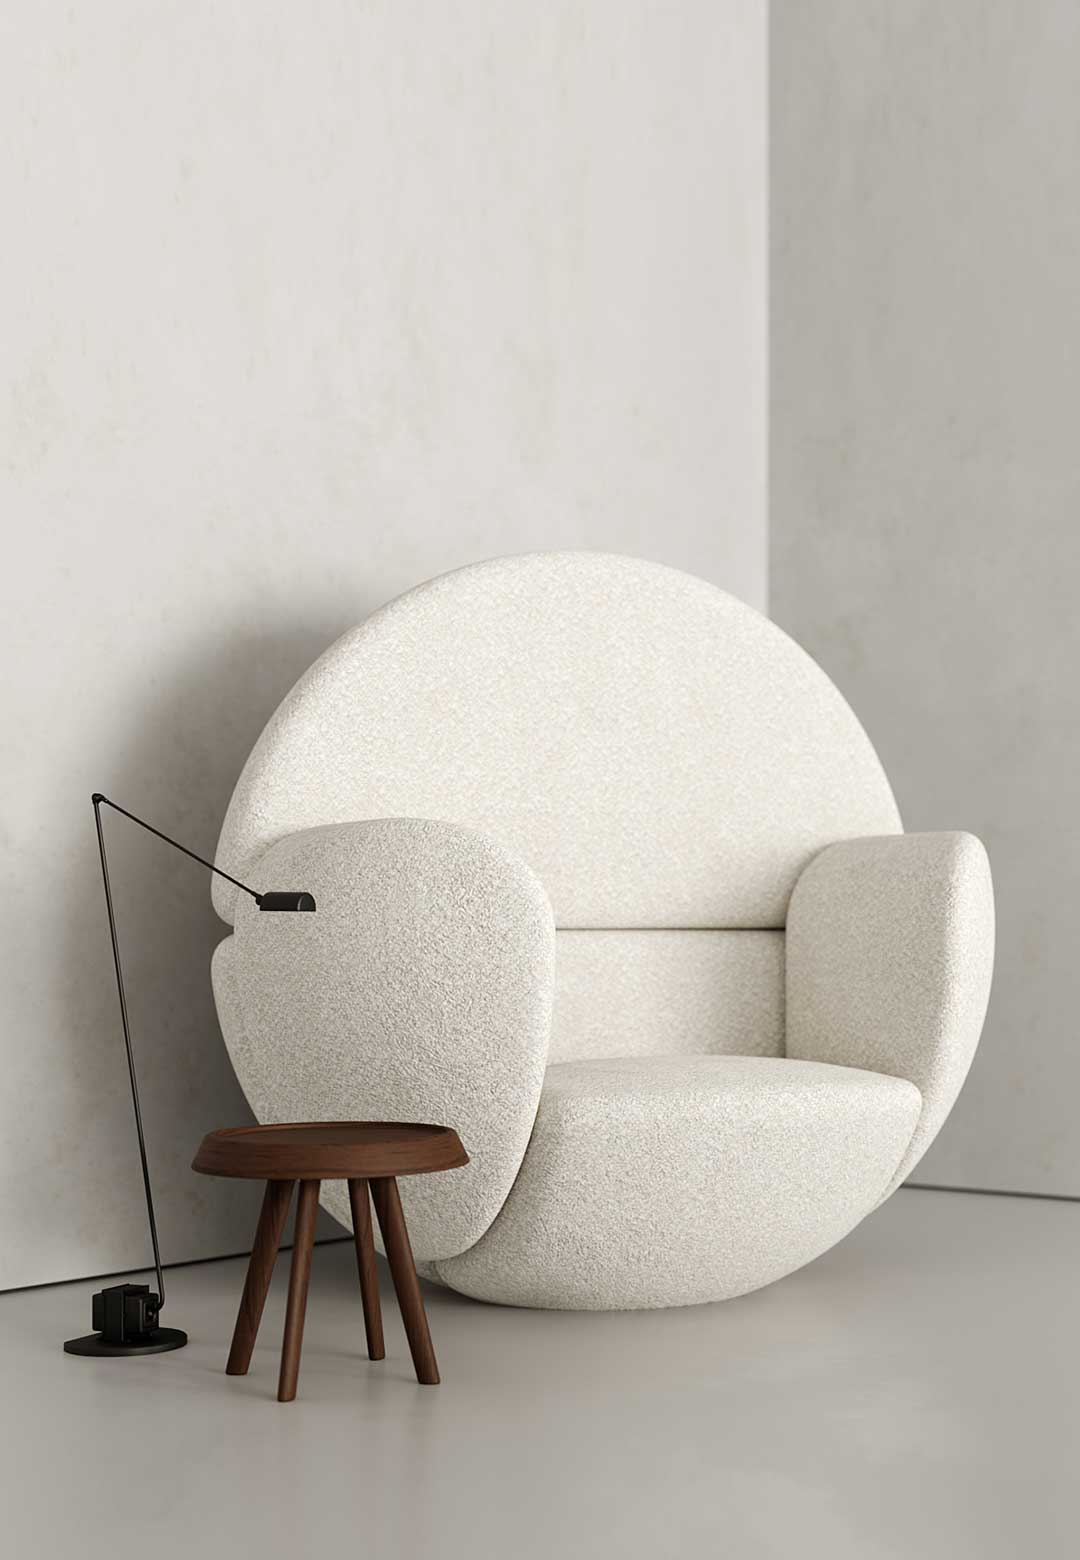 Studioforma’s Clodette lounge chair evokes childhood nostalgia